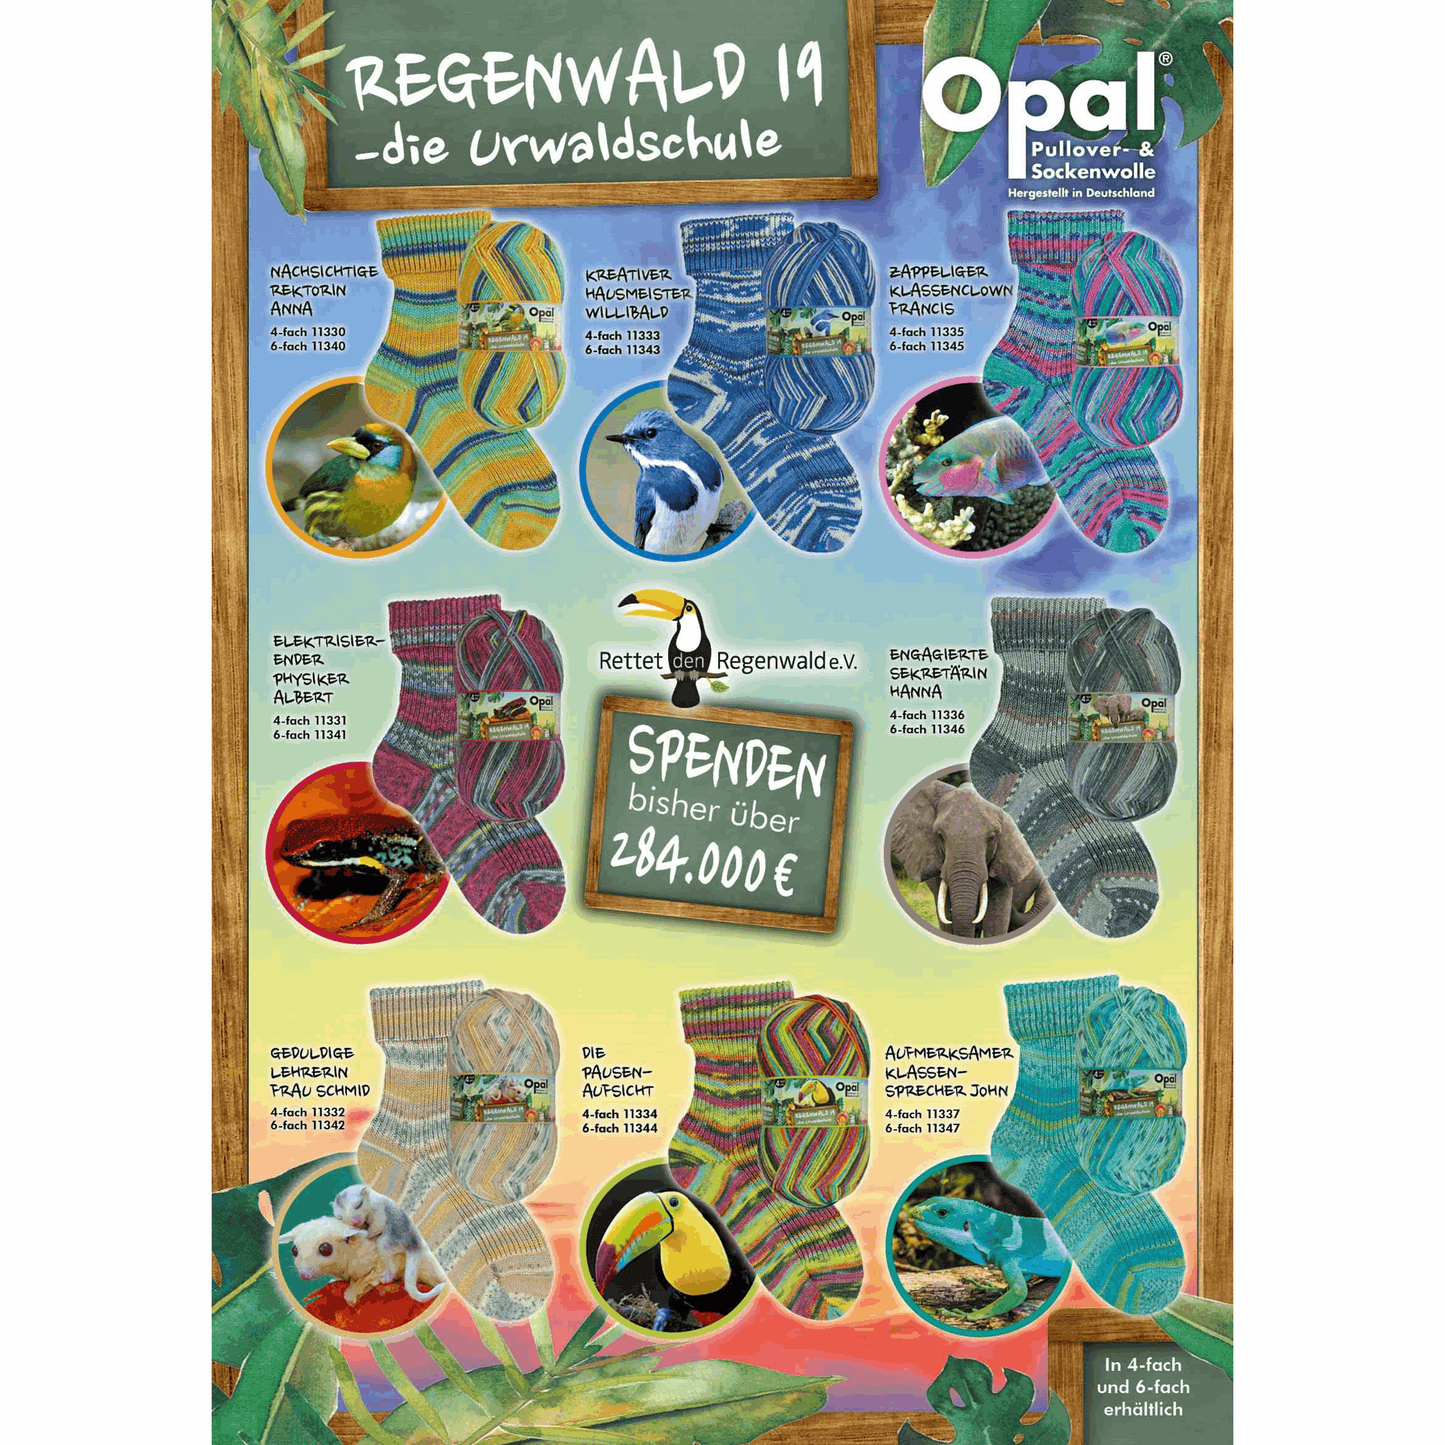 Opal Regenwald 19 4fädig 100g, 97754, Farbe elektrisierender Physiker Albert 1331